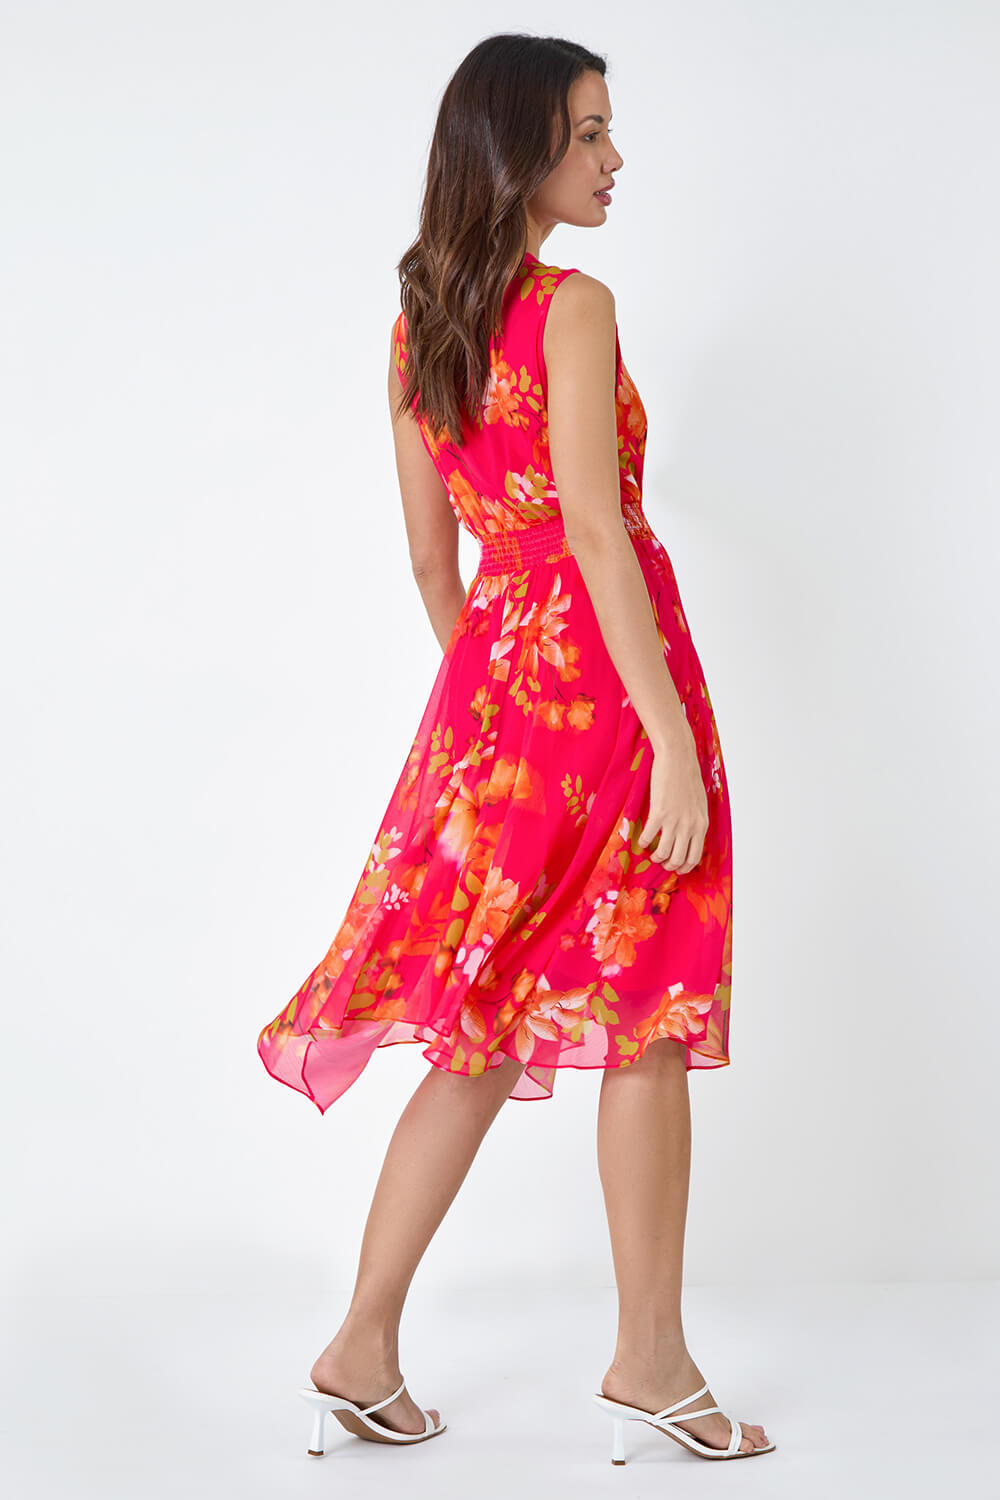 CERISE Floral Print Shirred Asymmetric Dress, Image 3 of 6